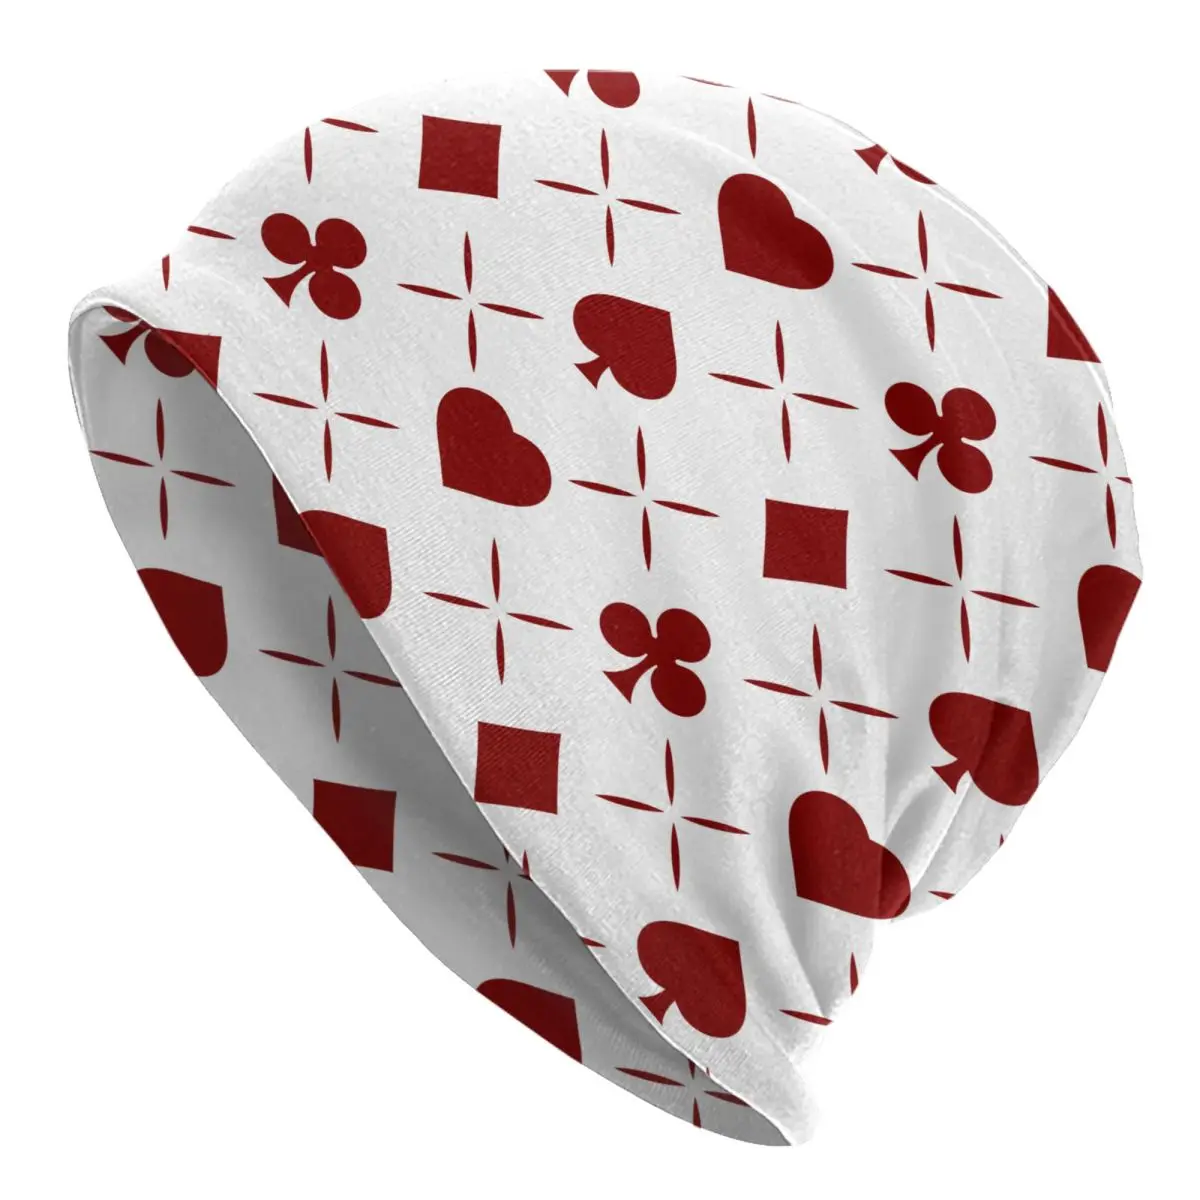 Red Poker Hearts Clubs Spades And Diamonds Men's Beanies for Women Outdoor Bonnet Hats Unisex Knitted Hat Hip Hop Cap